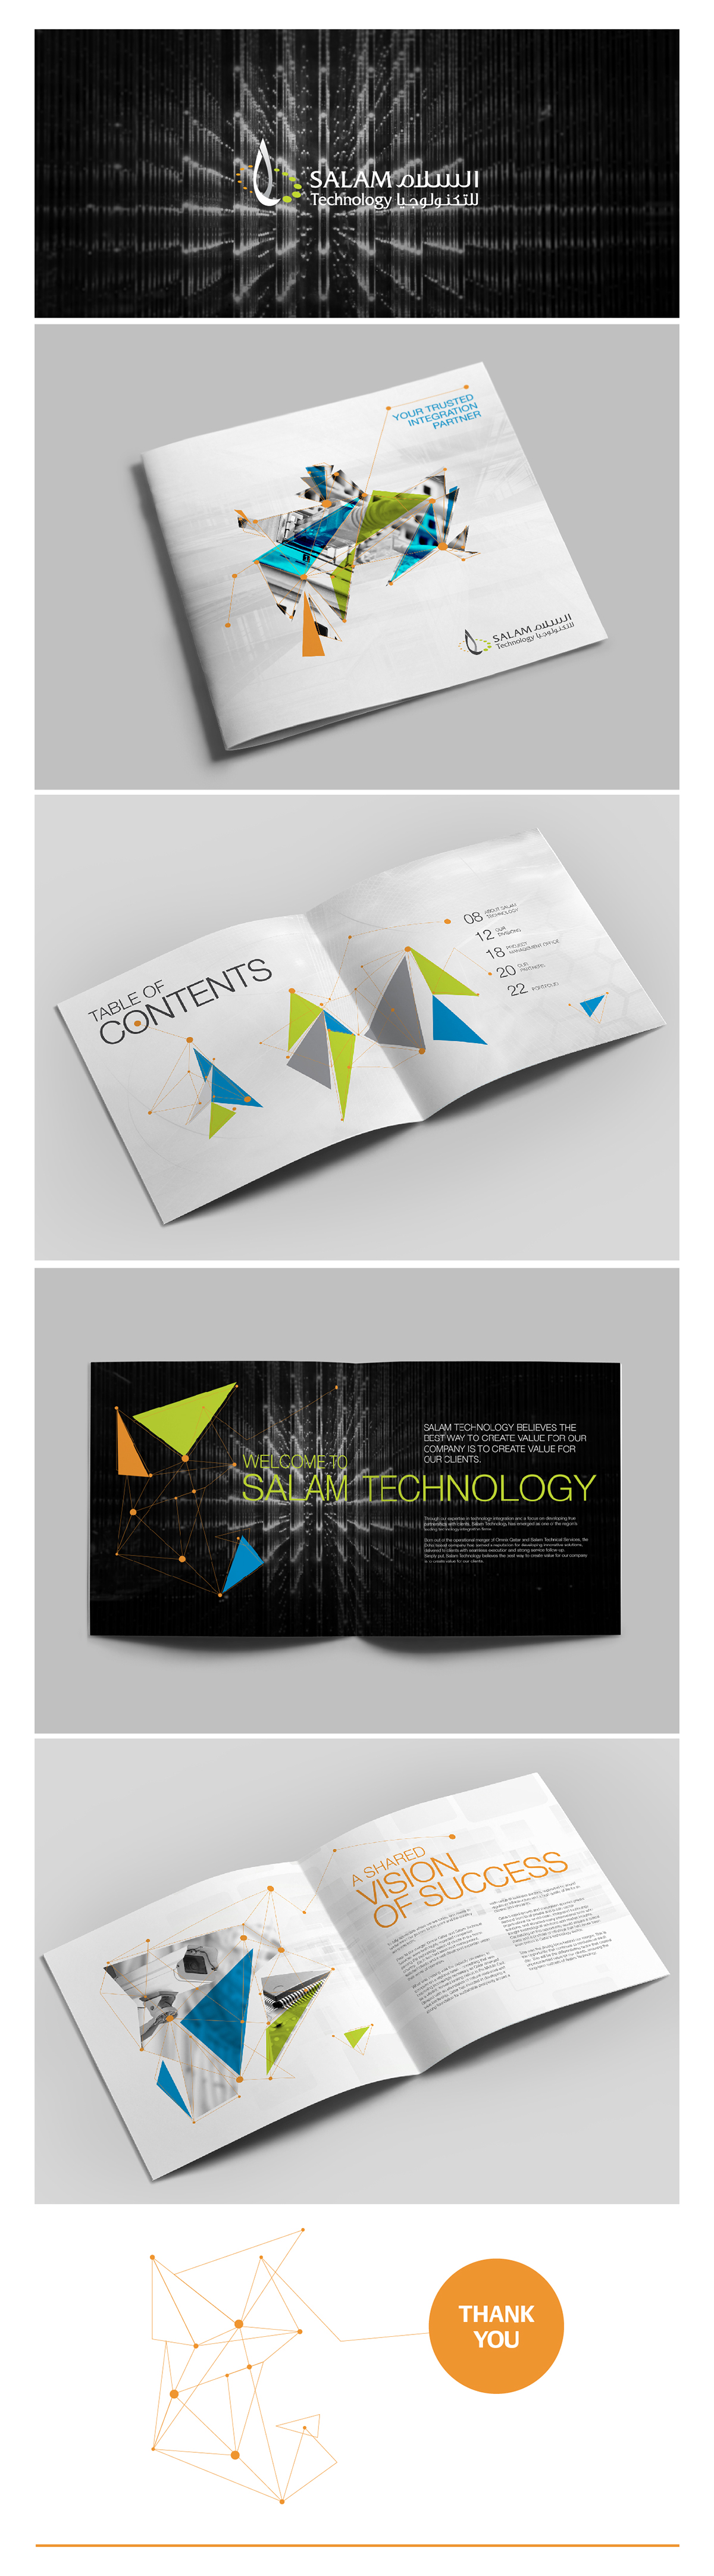 Salam Technology Corporate brochure